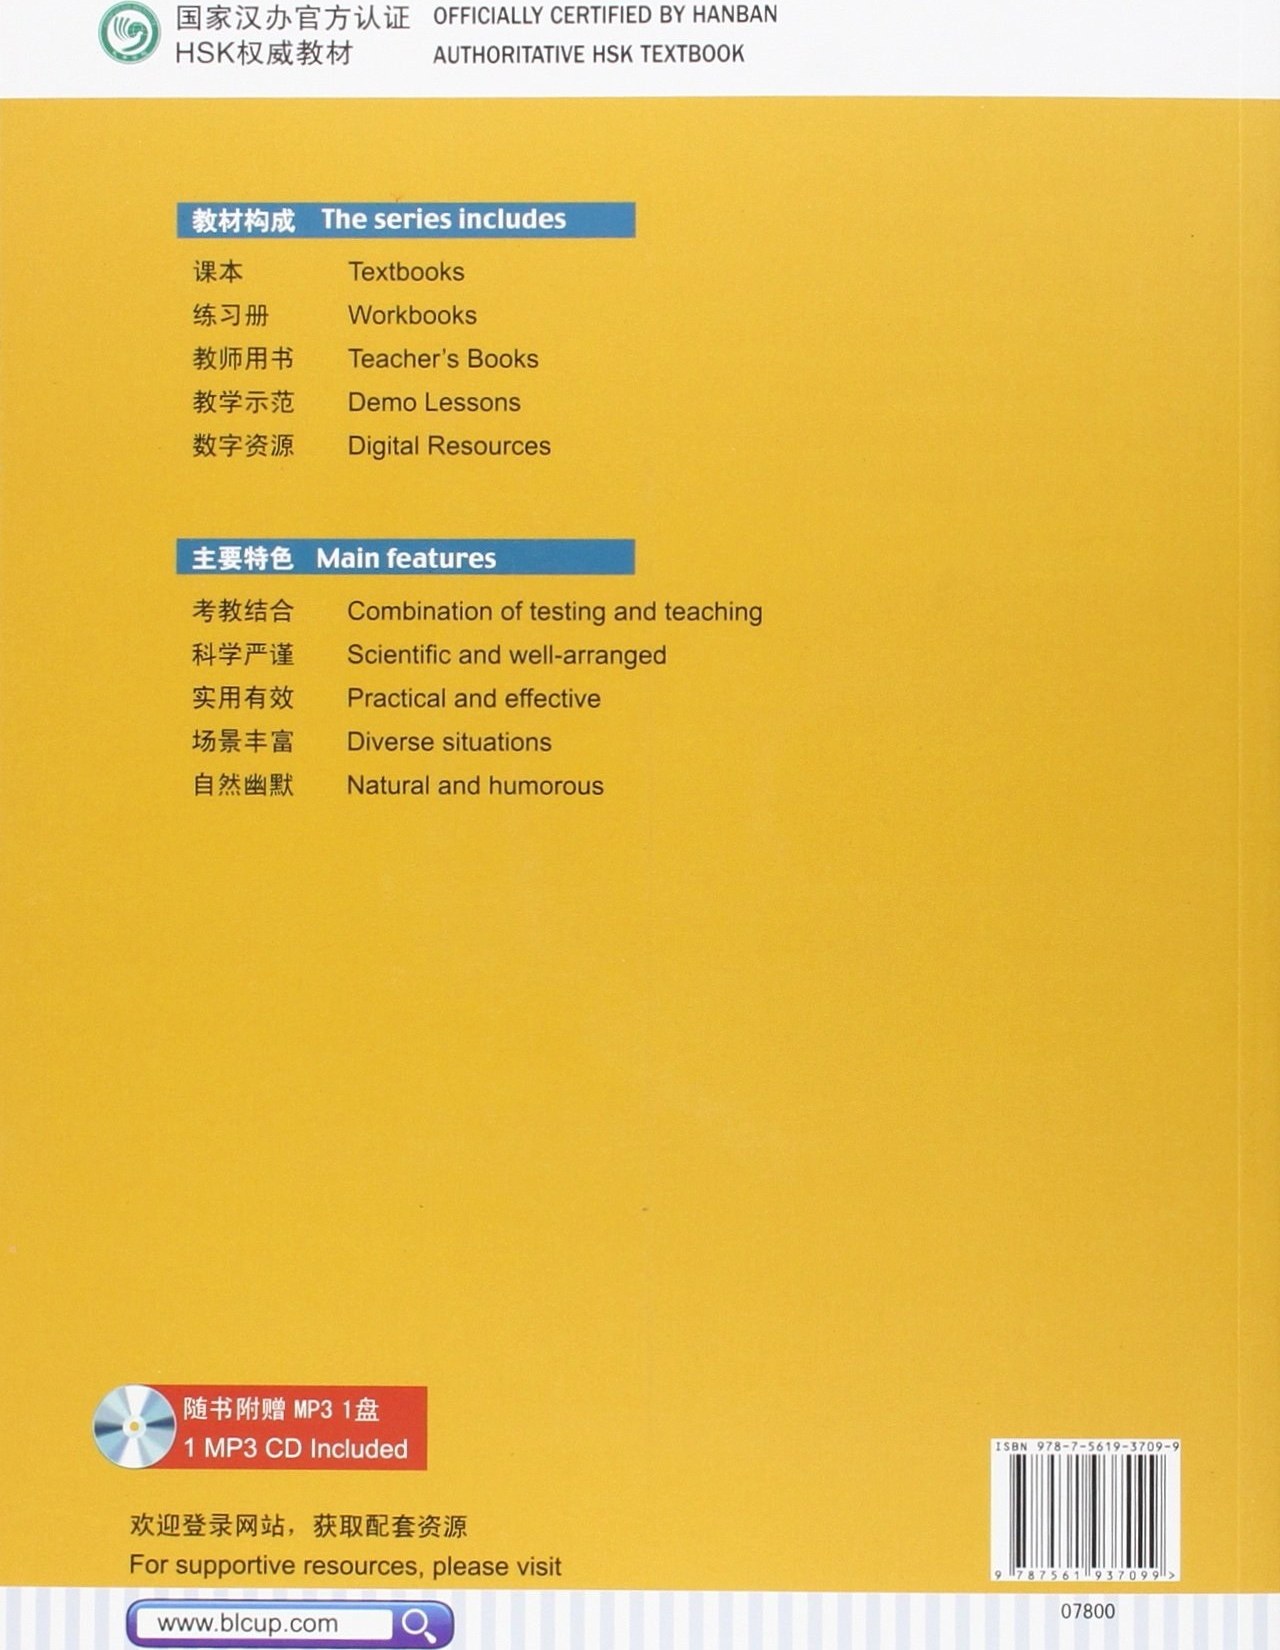 خرید و قیمت HSK Standard Course 1 Chinese and English Edition +CD ( کتاباصلی + کتاب کار ) چاپ رنگی اندازه وزیری | ترب